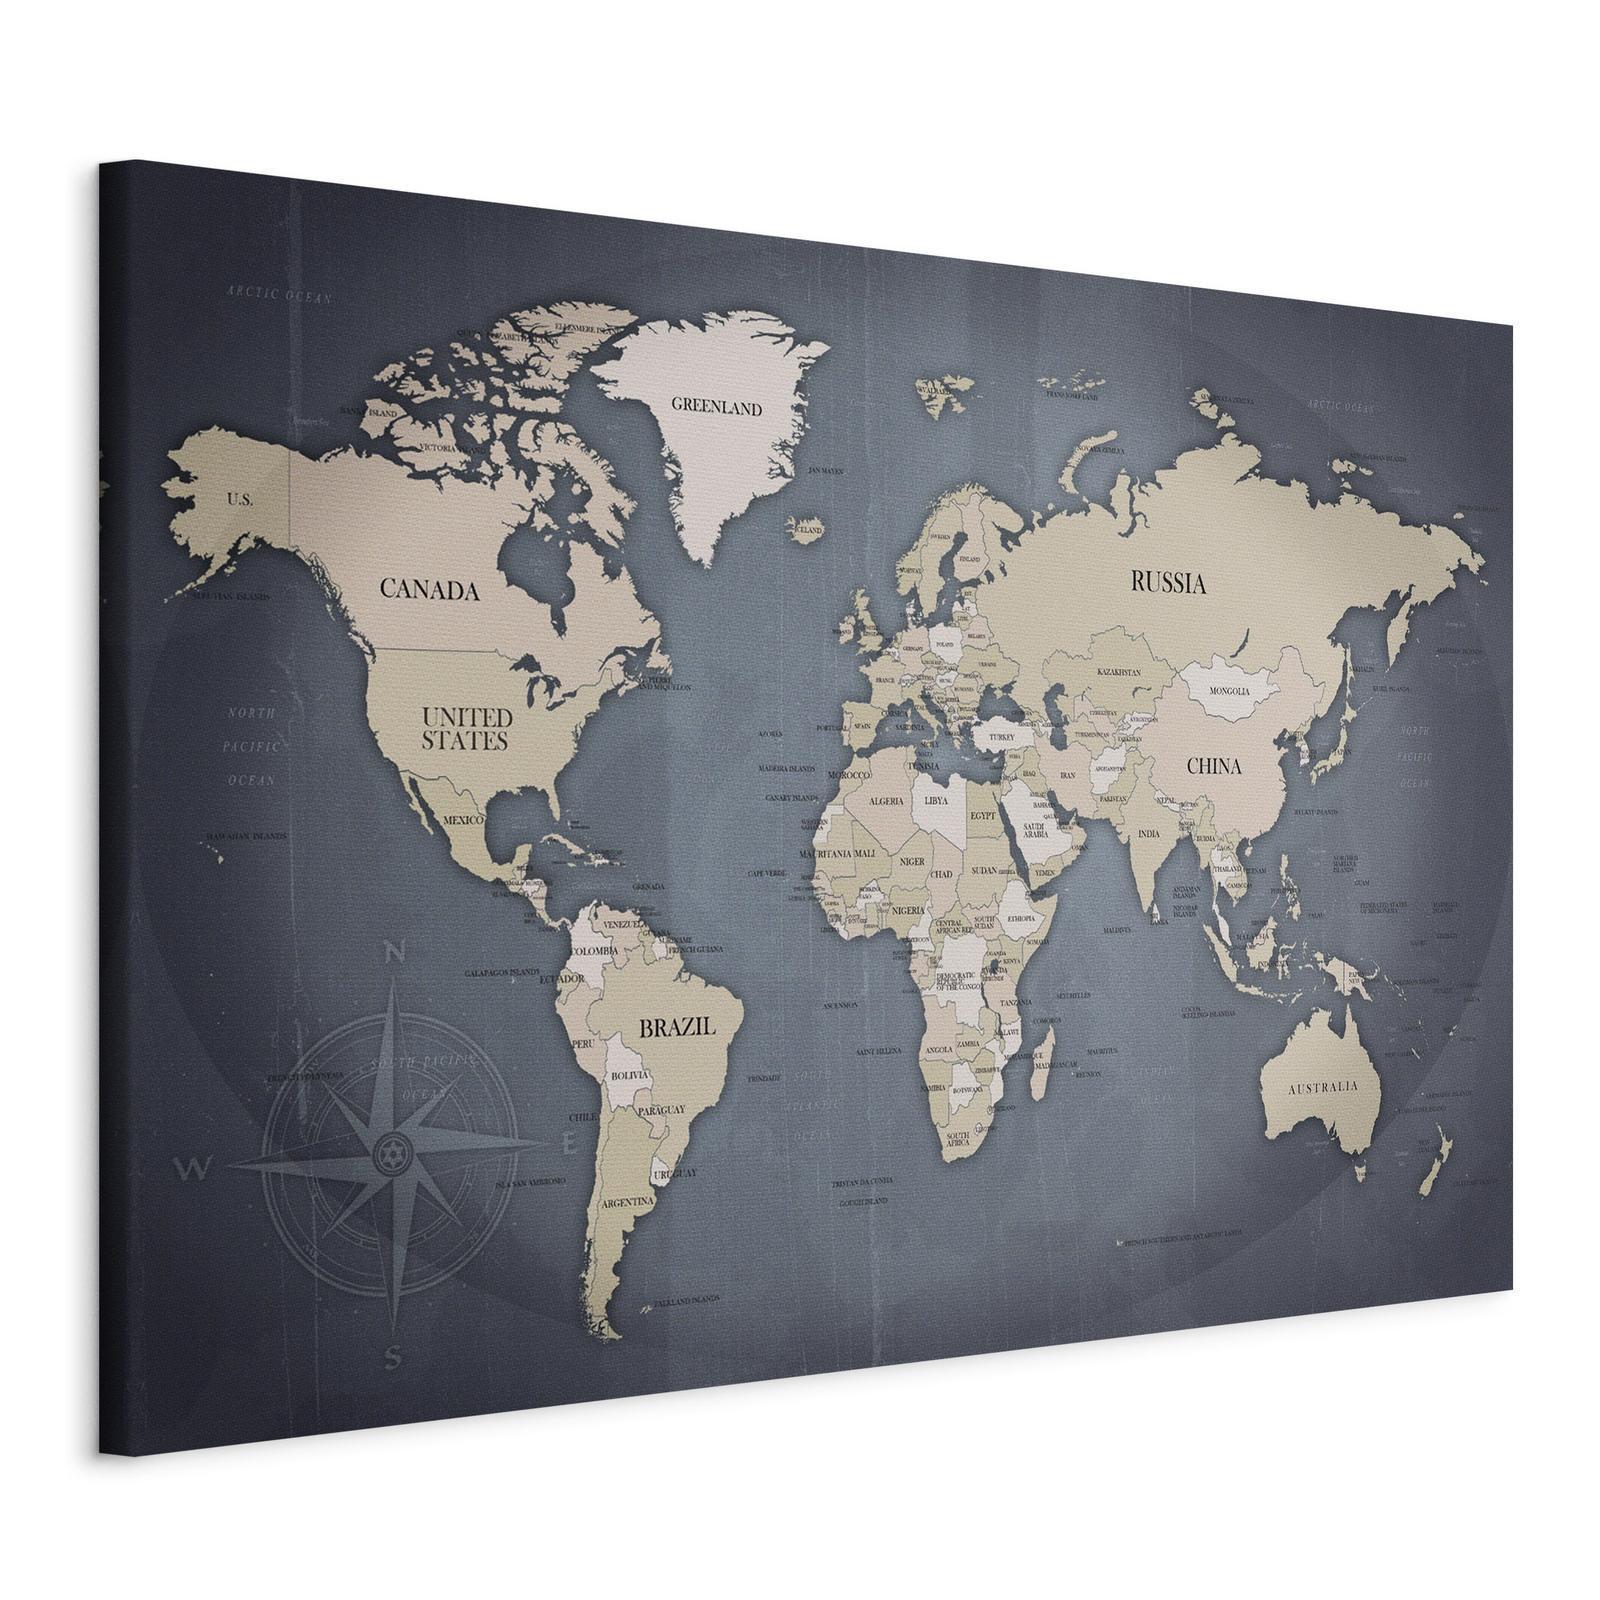 Tableau - World Map: Shades of Grey